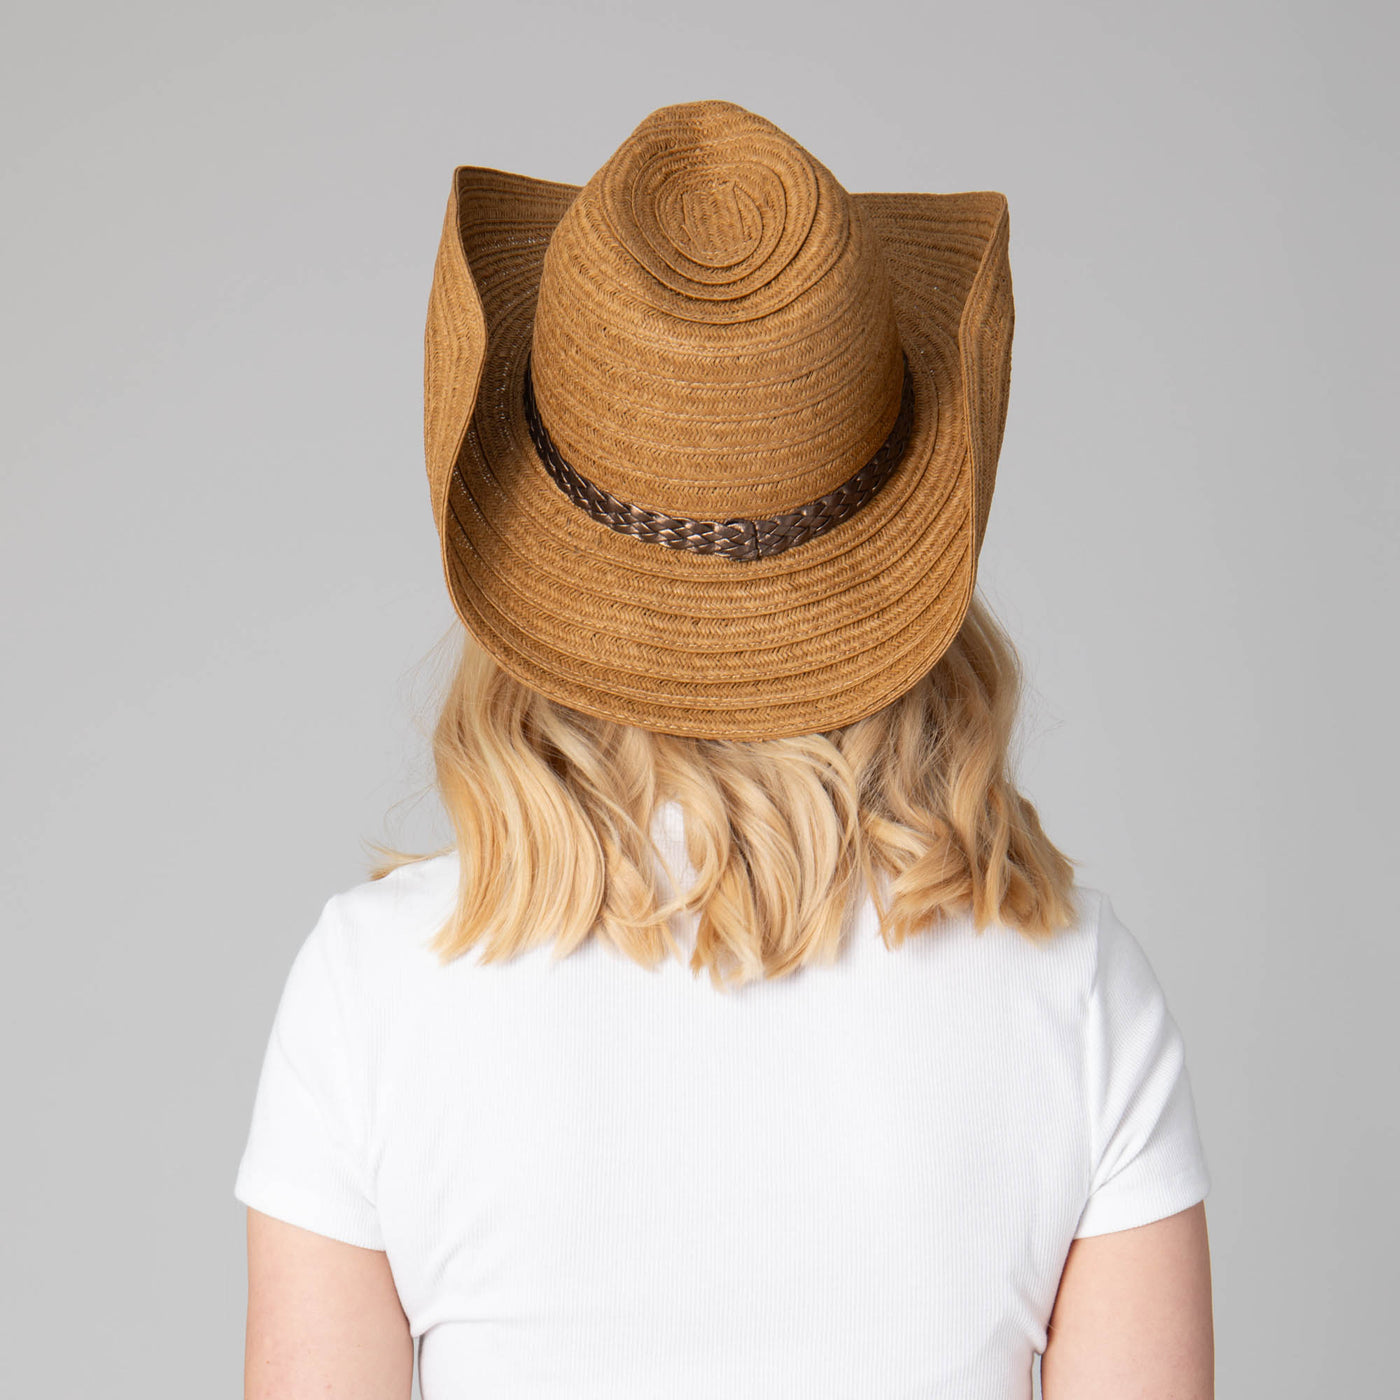 Storm - Women's Pinched Crown Cowboy-COWBOY-San Diego Hat Company